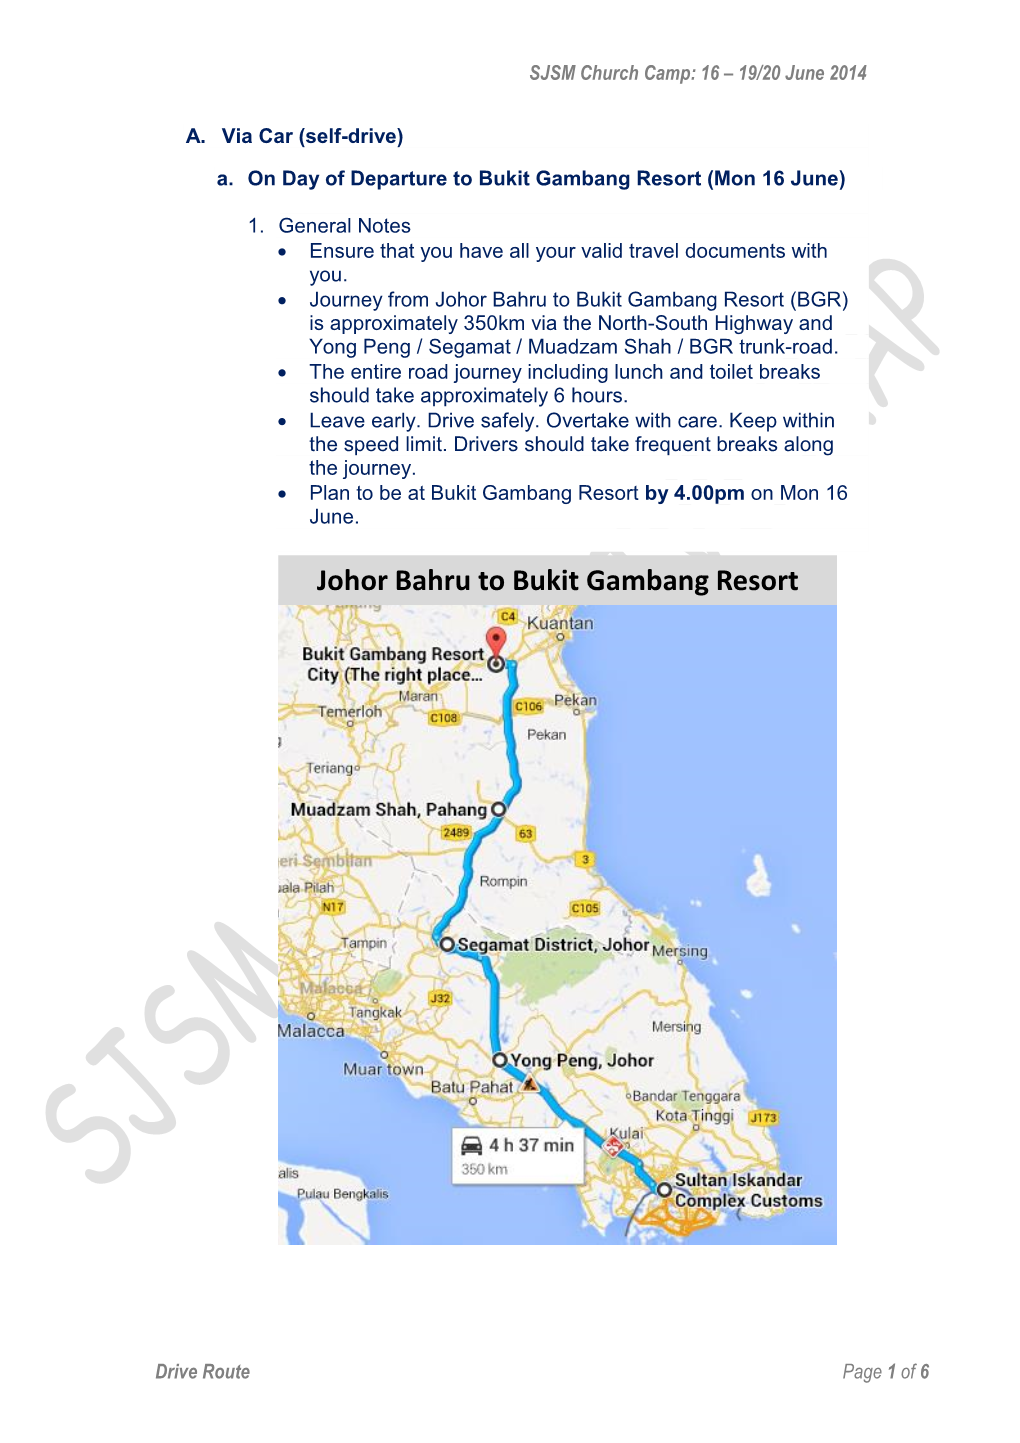 Johor Bahru to Bukit Gambang Resort (BGR) Is Approximately 350Km Via the North-South Highway and Yong Peng / Segamat / Muadzam Shah / BGR Trunk-Road